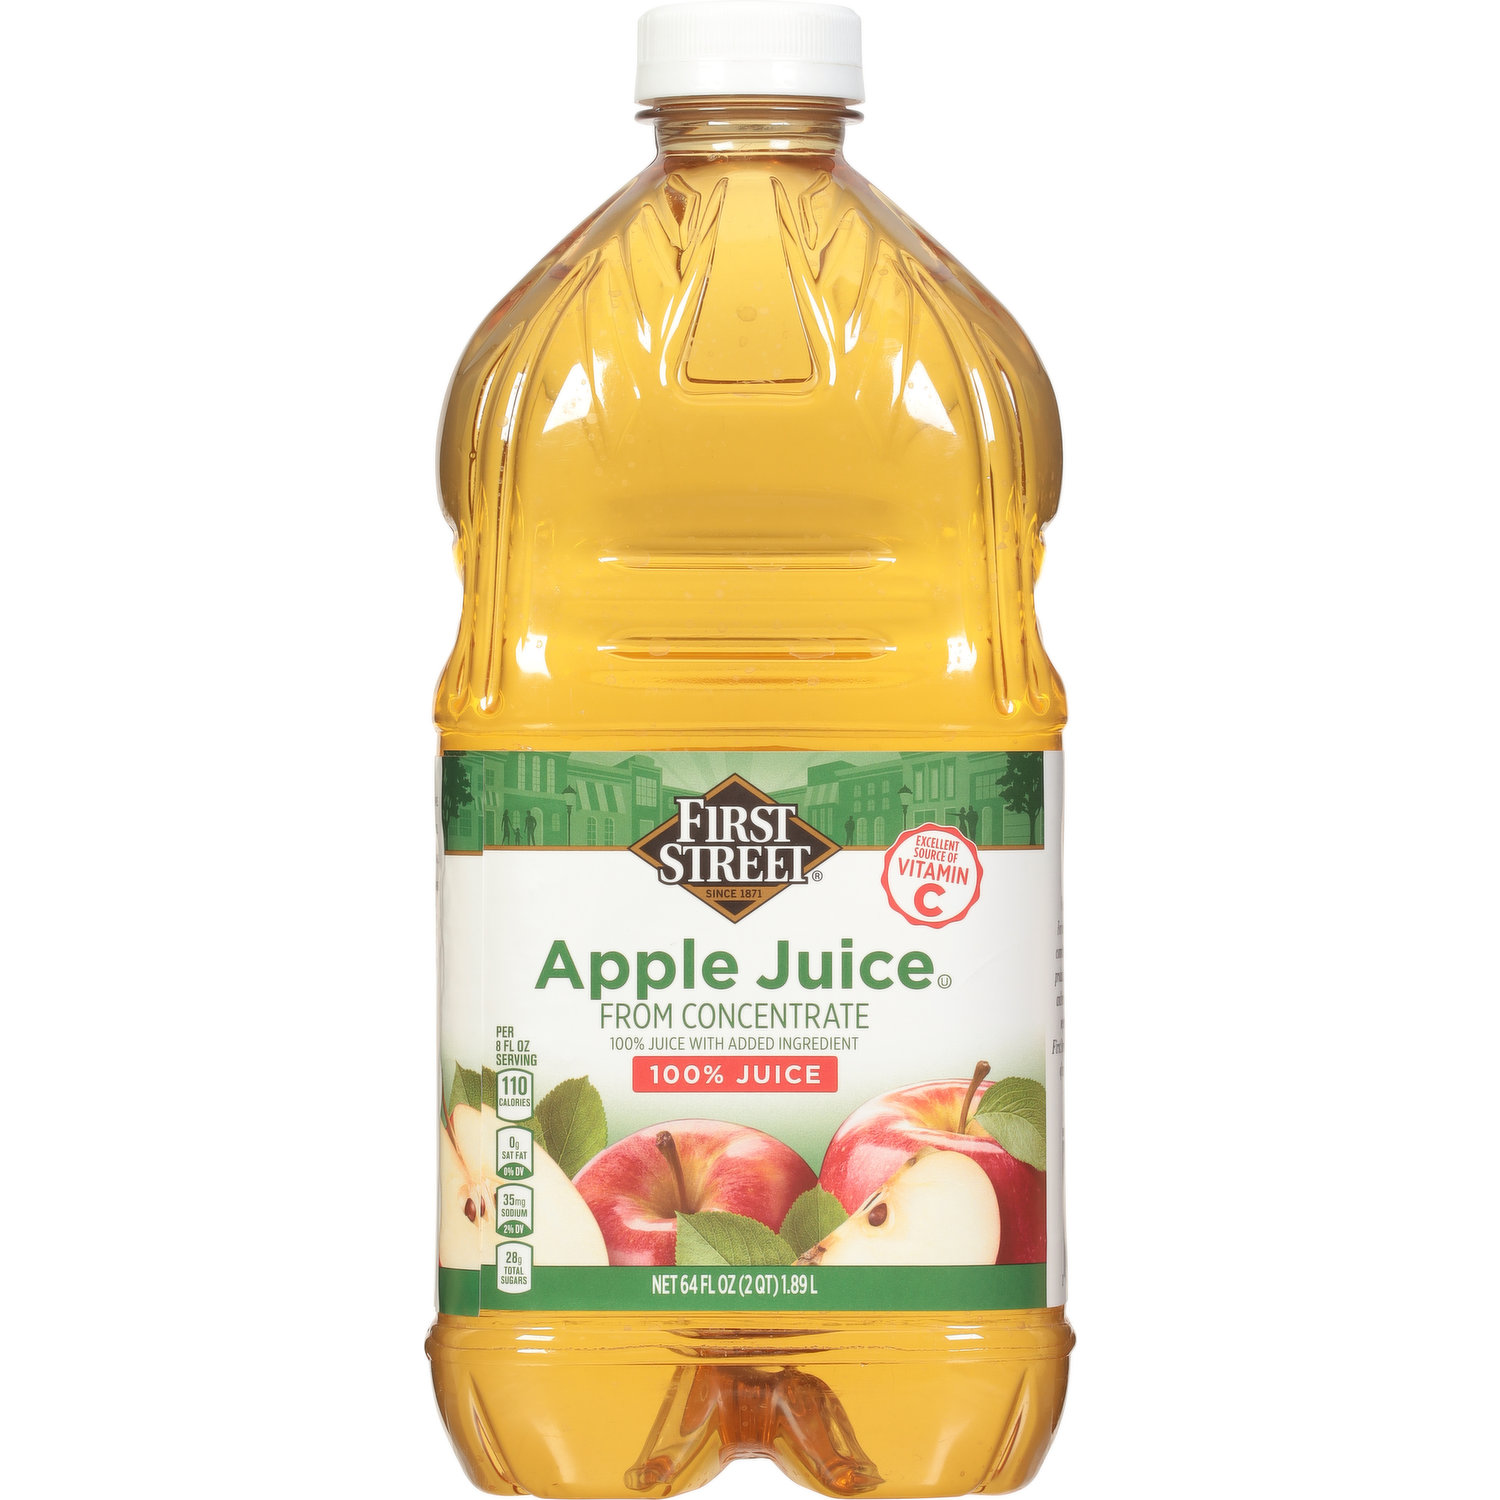 First Street 100% Juice, Apple - Smart & Final